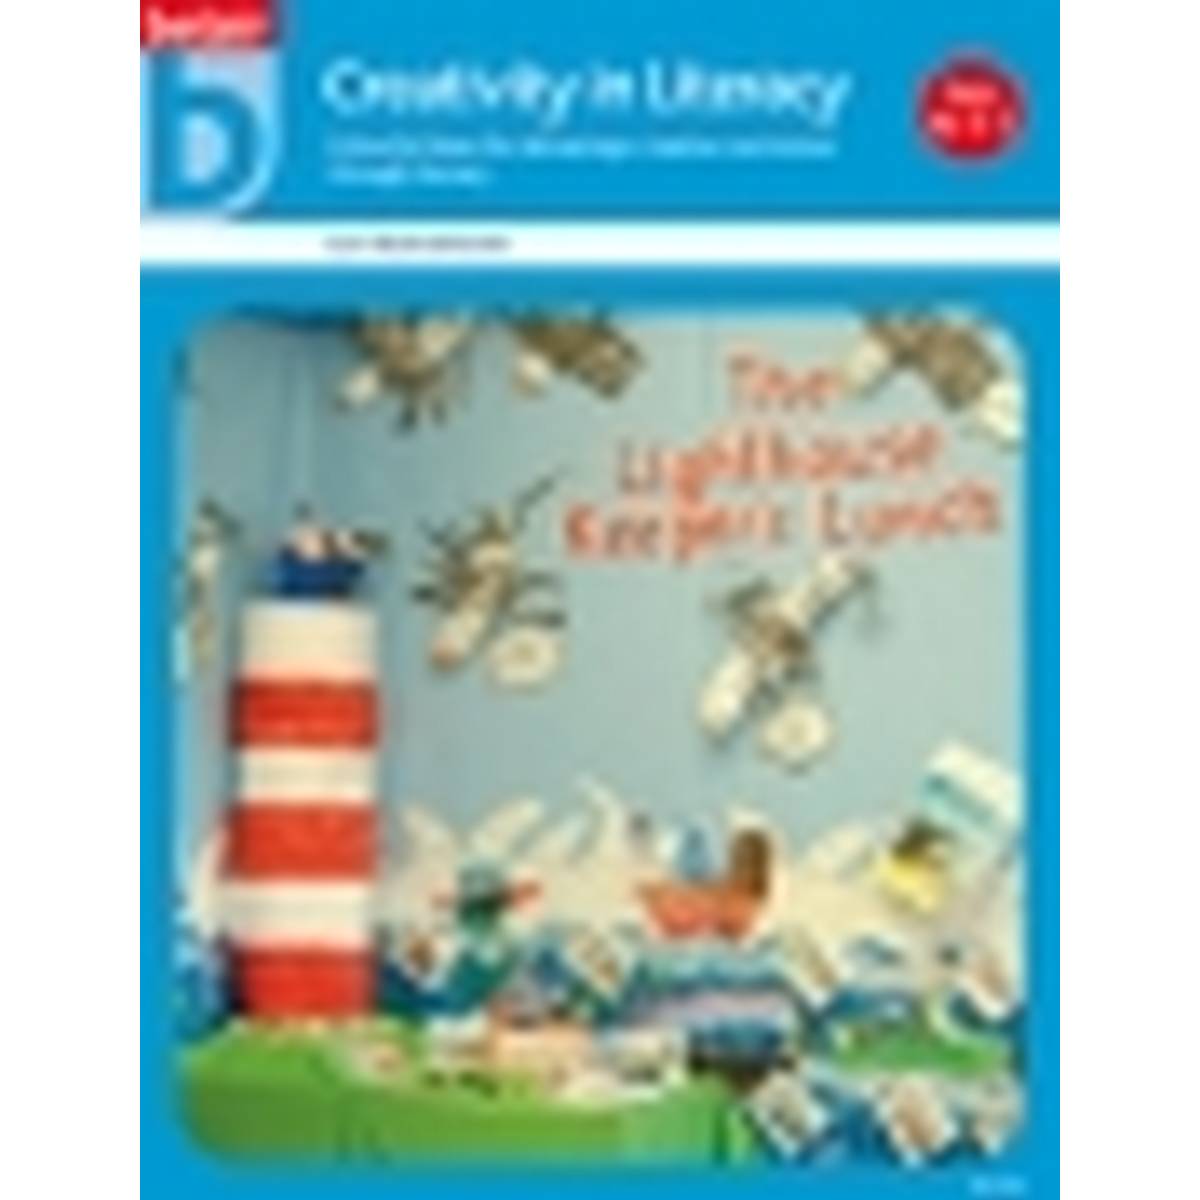 Belair on Display - Creativity in Literacy